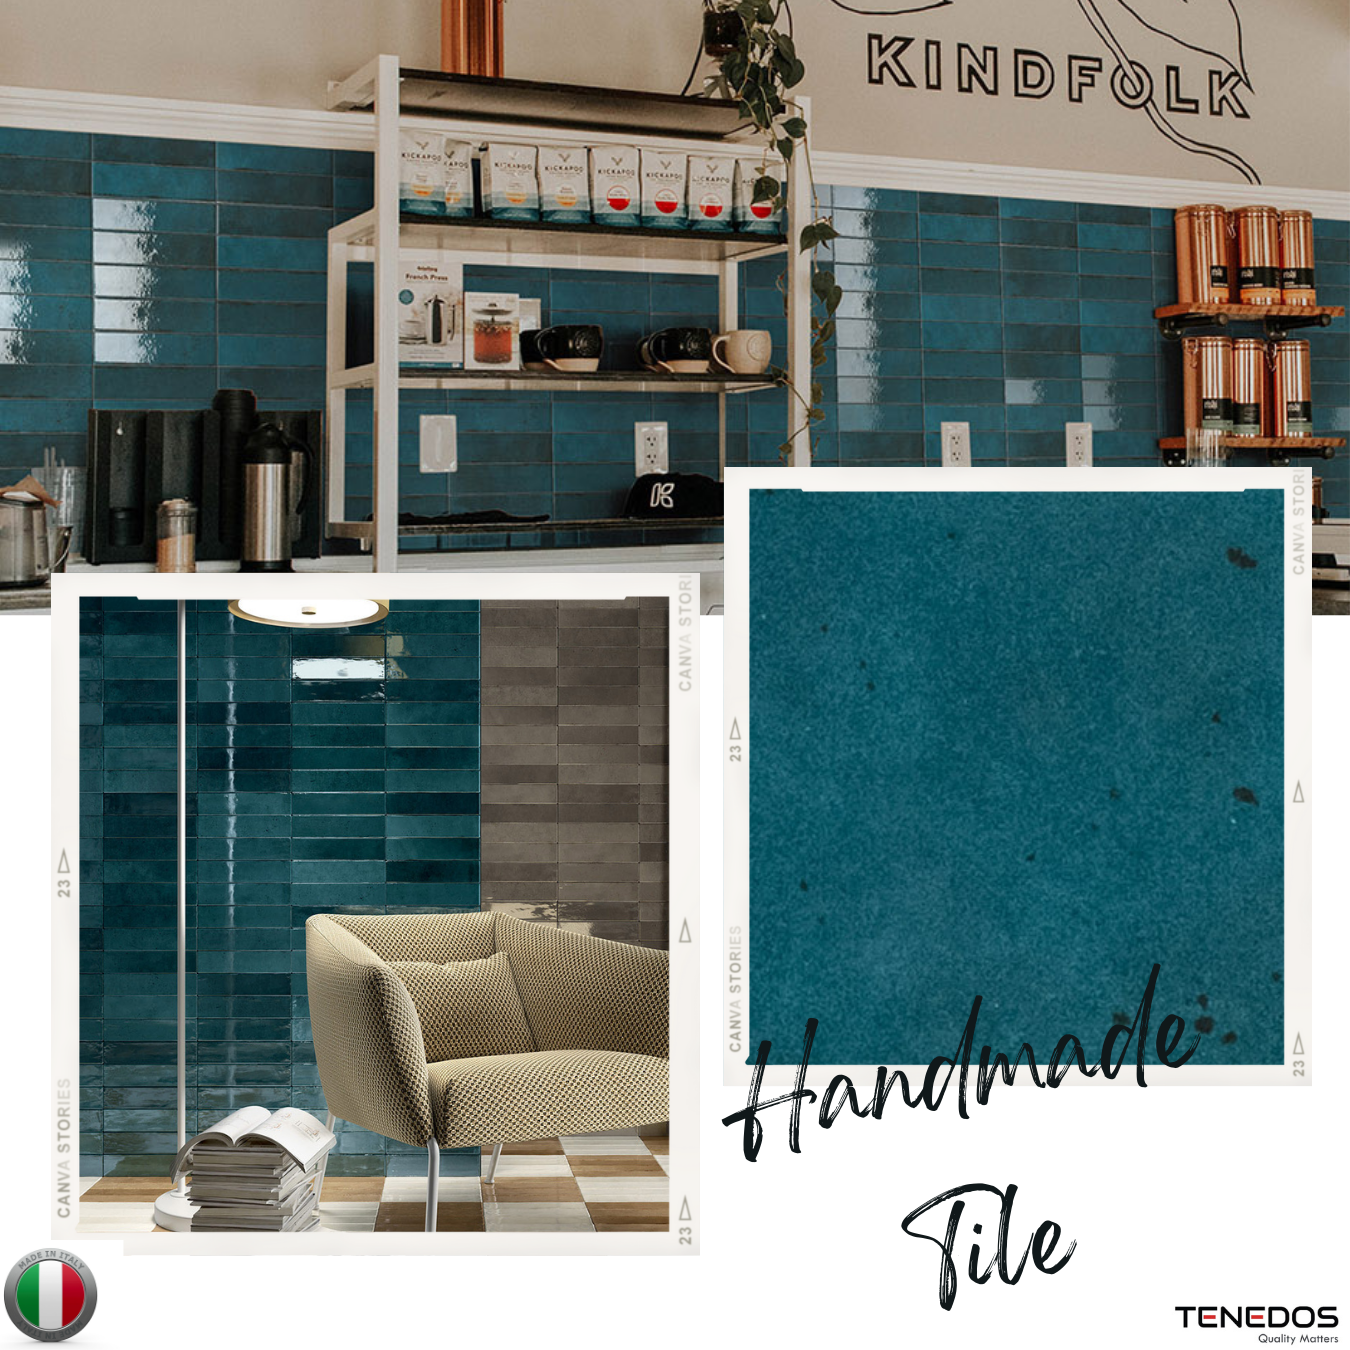 TTTD-PRC-STR Amore 2x10 Dark Blue Handmade Bright Porcelain Wall Floor Tile Backsplash for Kitchen, Bathroom, Fireplace, Accent Decor, Made in Italy